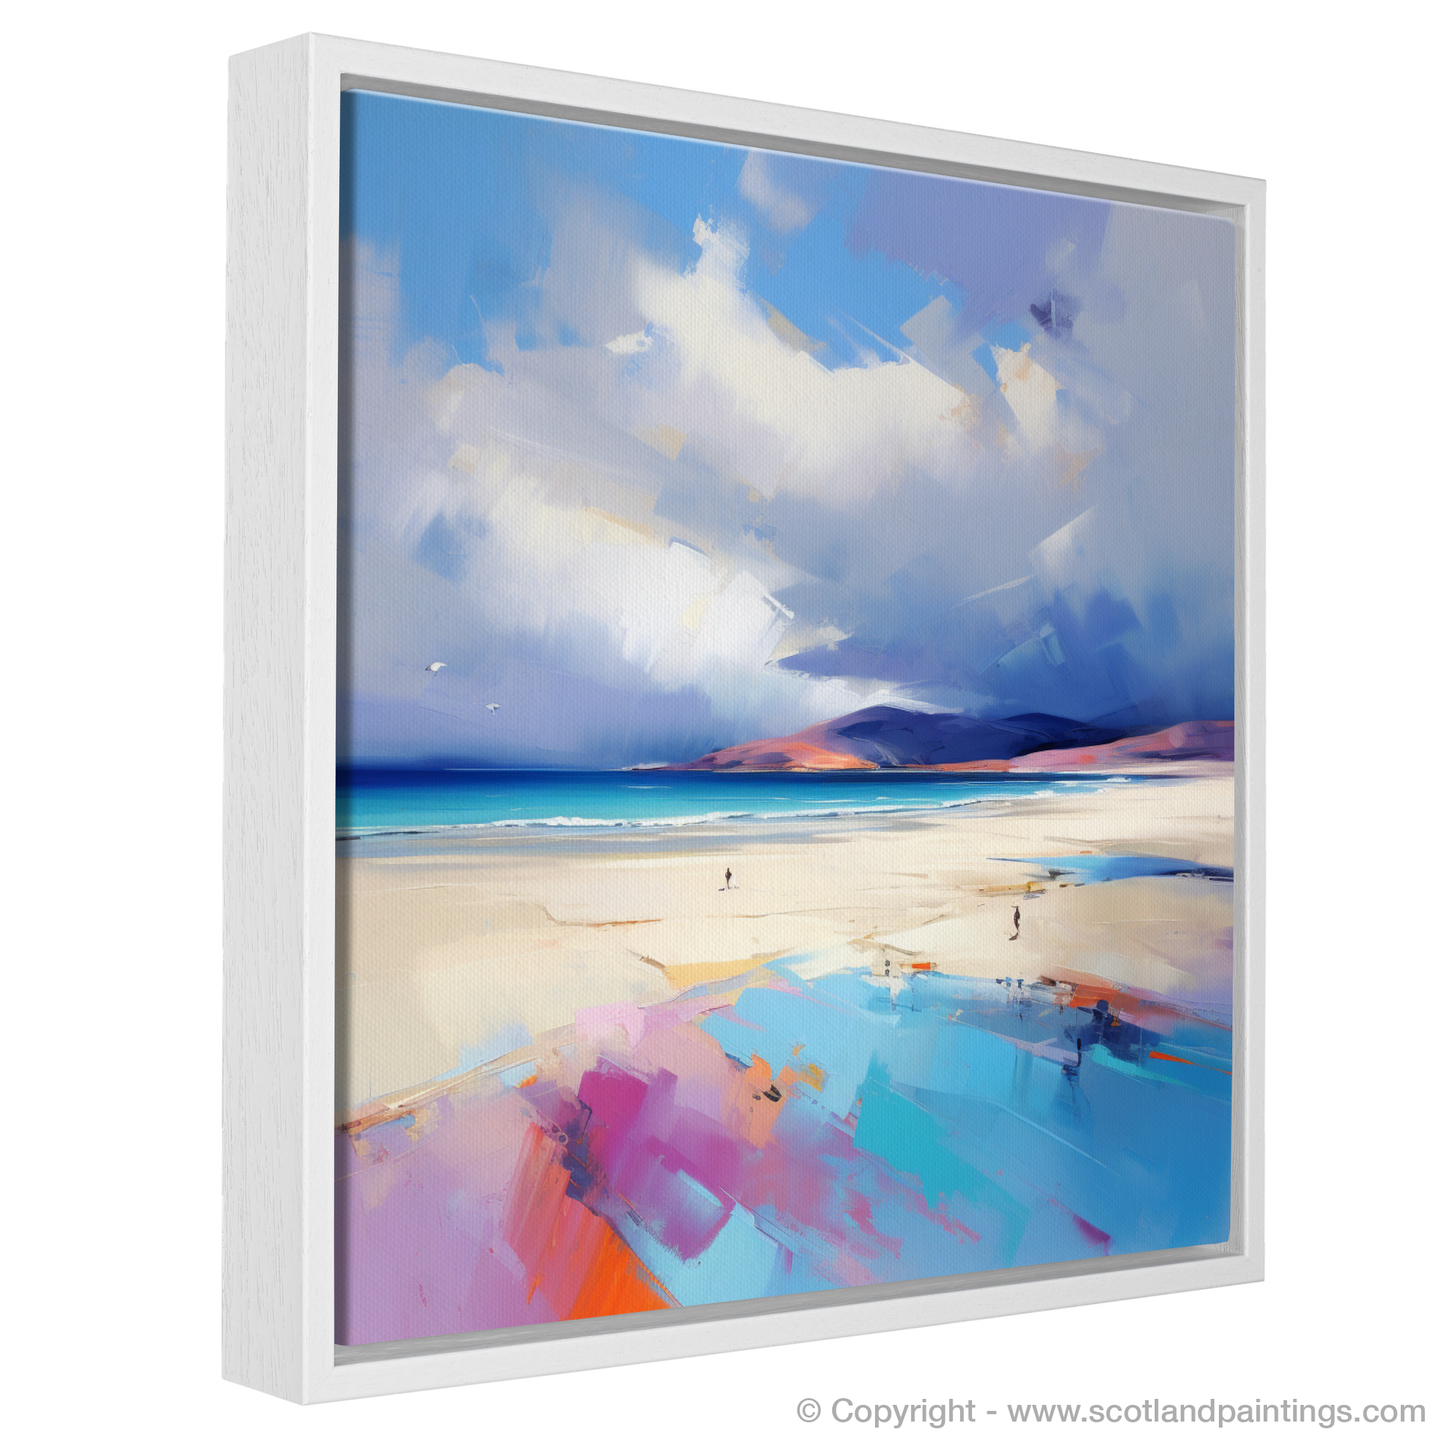 Painting and Art Print of Luskentyre Beach, Isle of Harris entitled "Luskentyre Beach: An Expressionist Ode to Scotland's Wild Coastline".